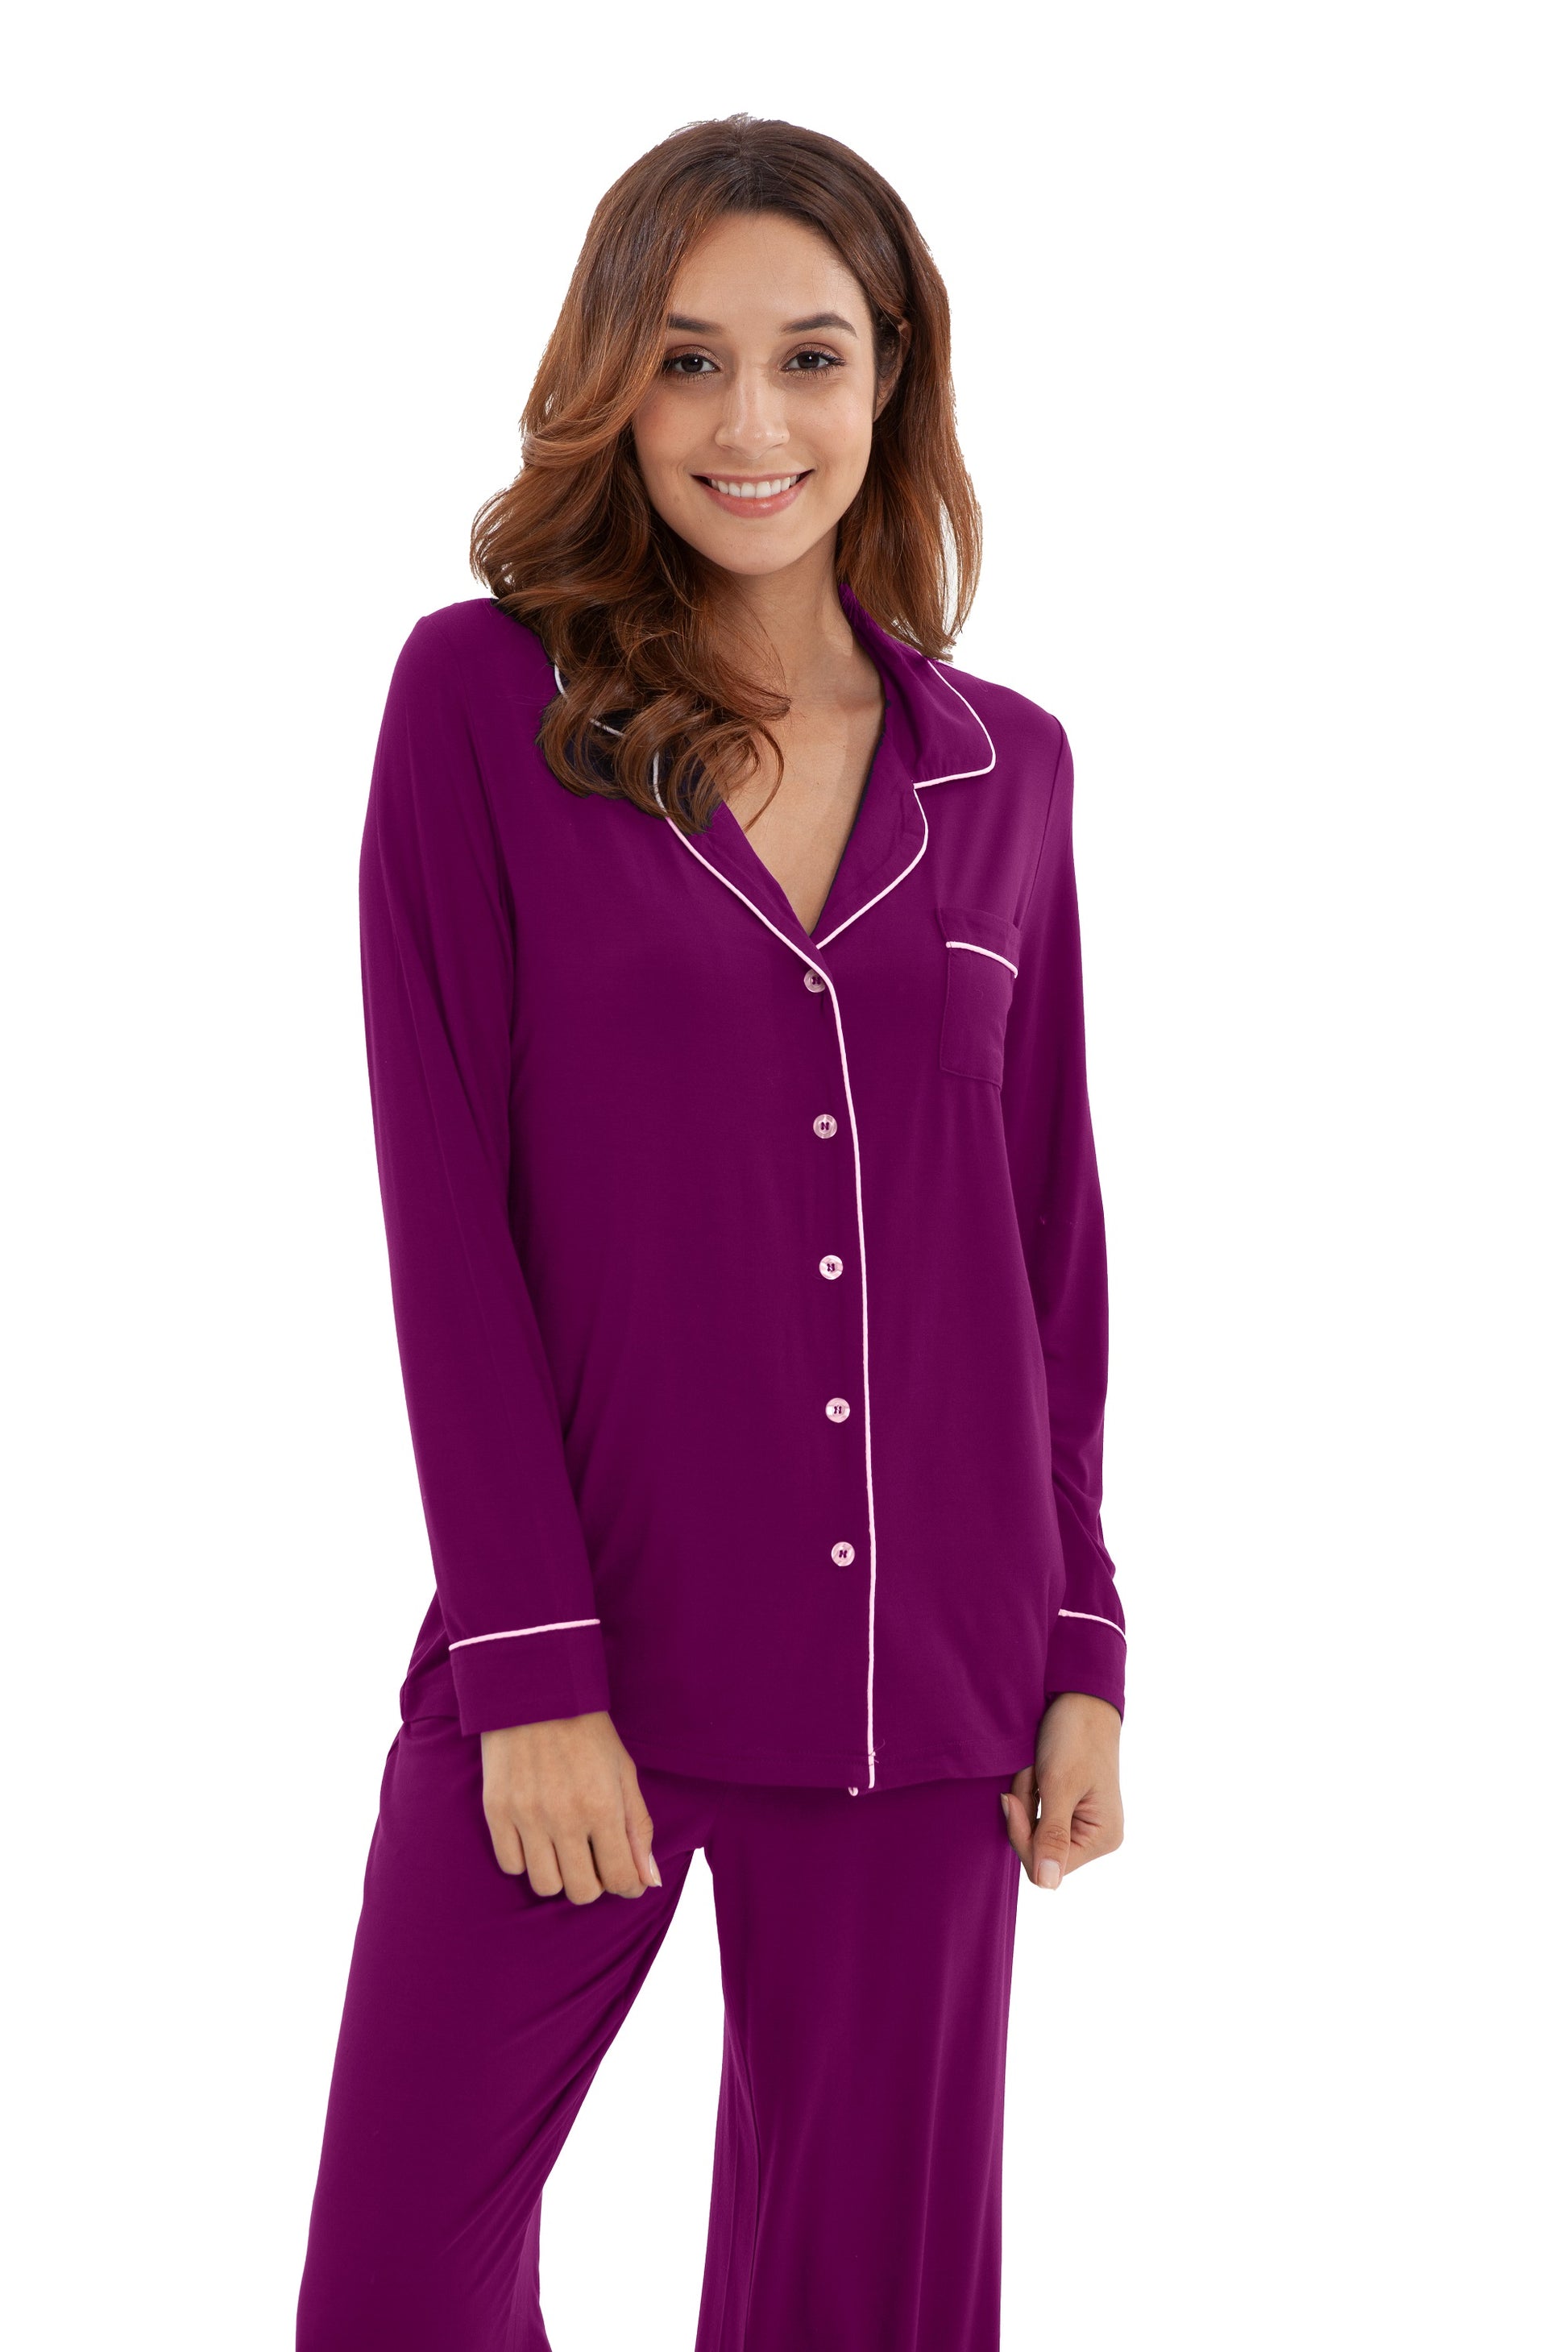 ALCEA ROSEA Womens Silk Satin Pajamas Set Long Sleeves and Button Down Pjs  Sleepwear Loungewear S-XXL (Midnight Blue, S) at  Women's Clothing  store